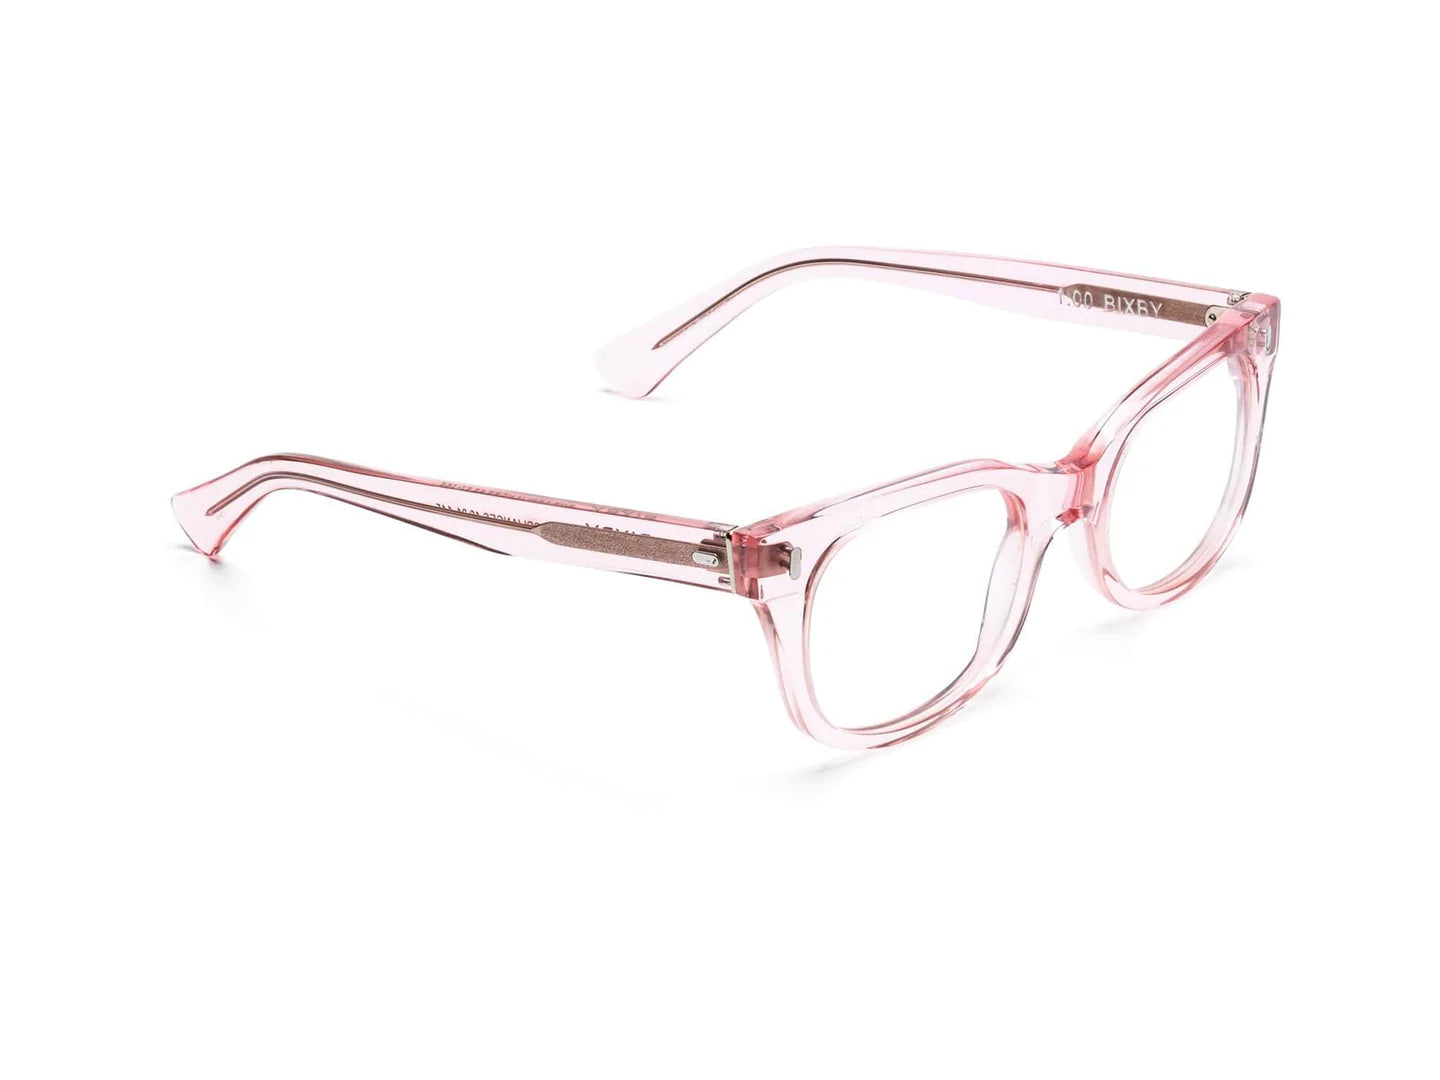 CADDIS Bixby Reading Glasses - Polished Clear Pink